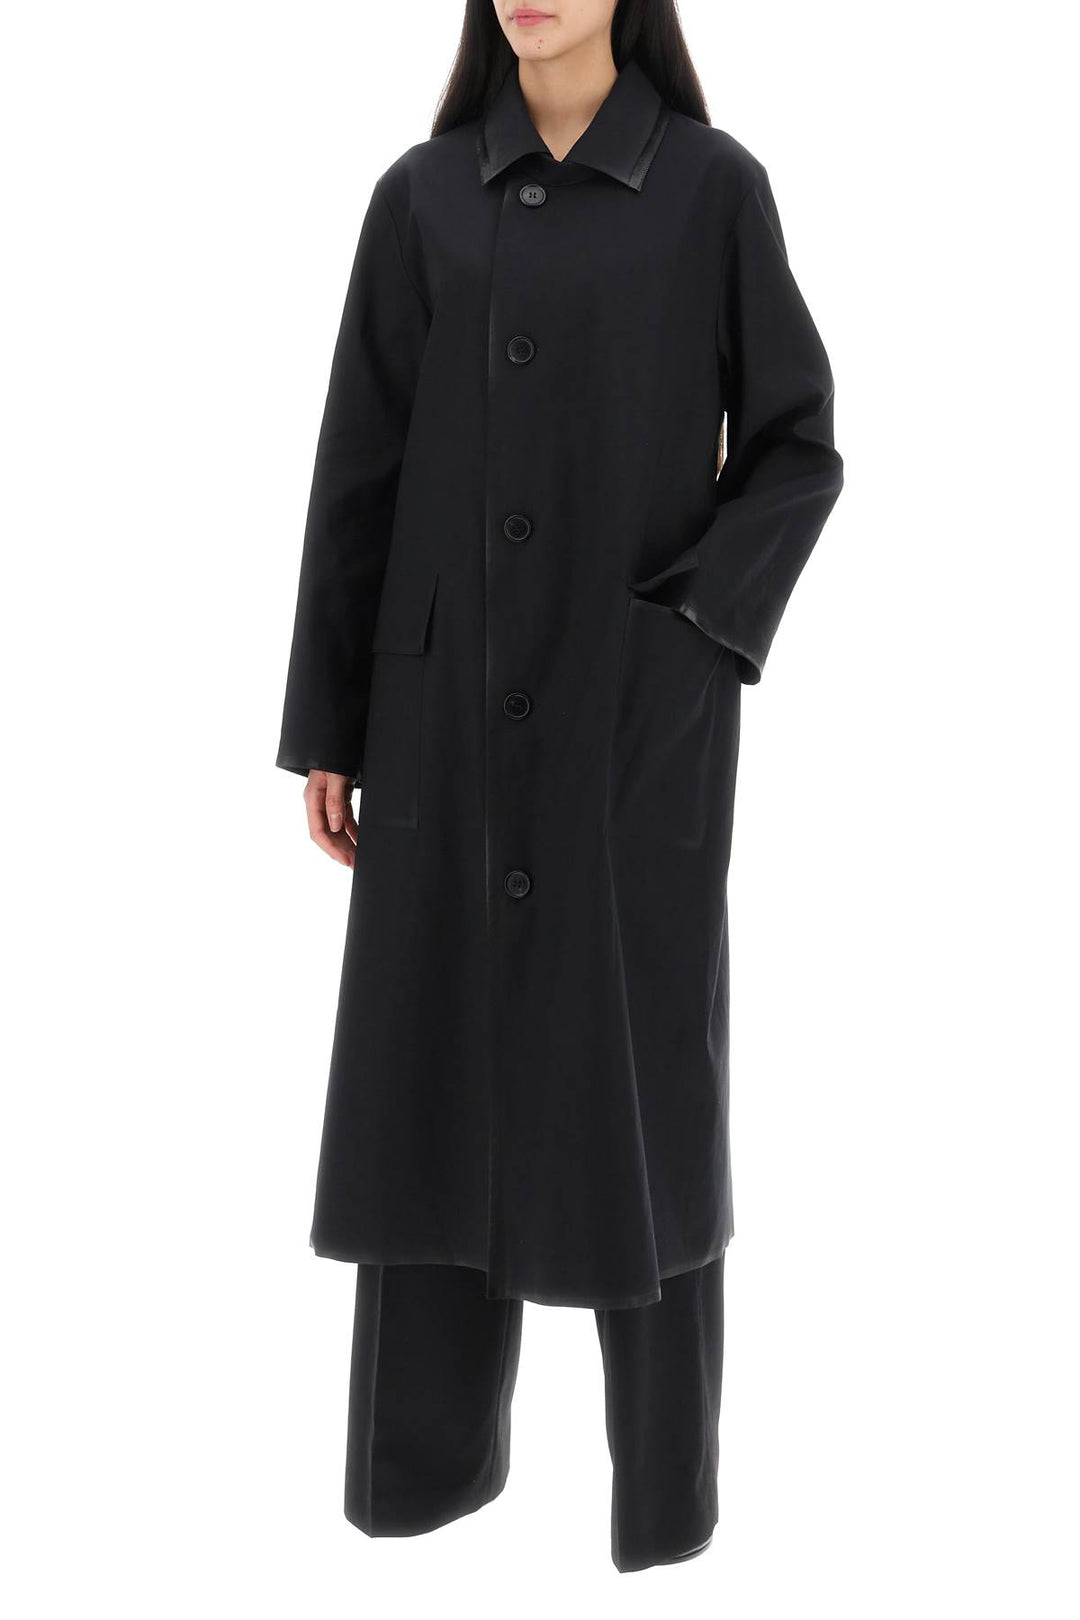 Maison margiela cotton coat with laminated trim details-3